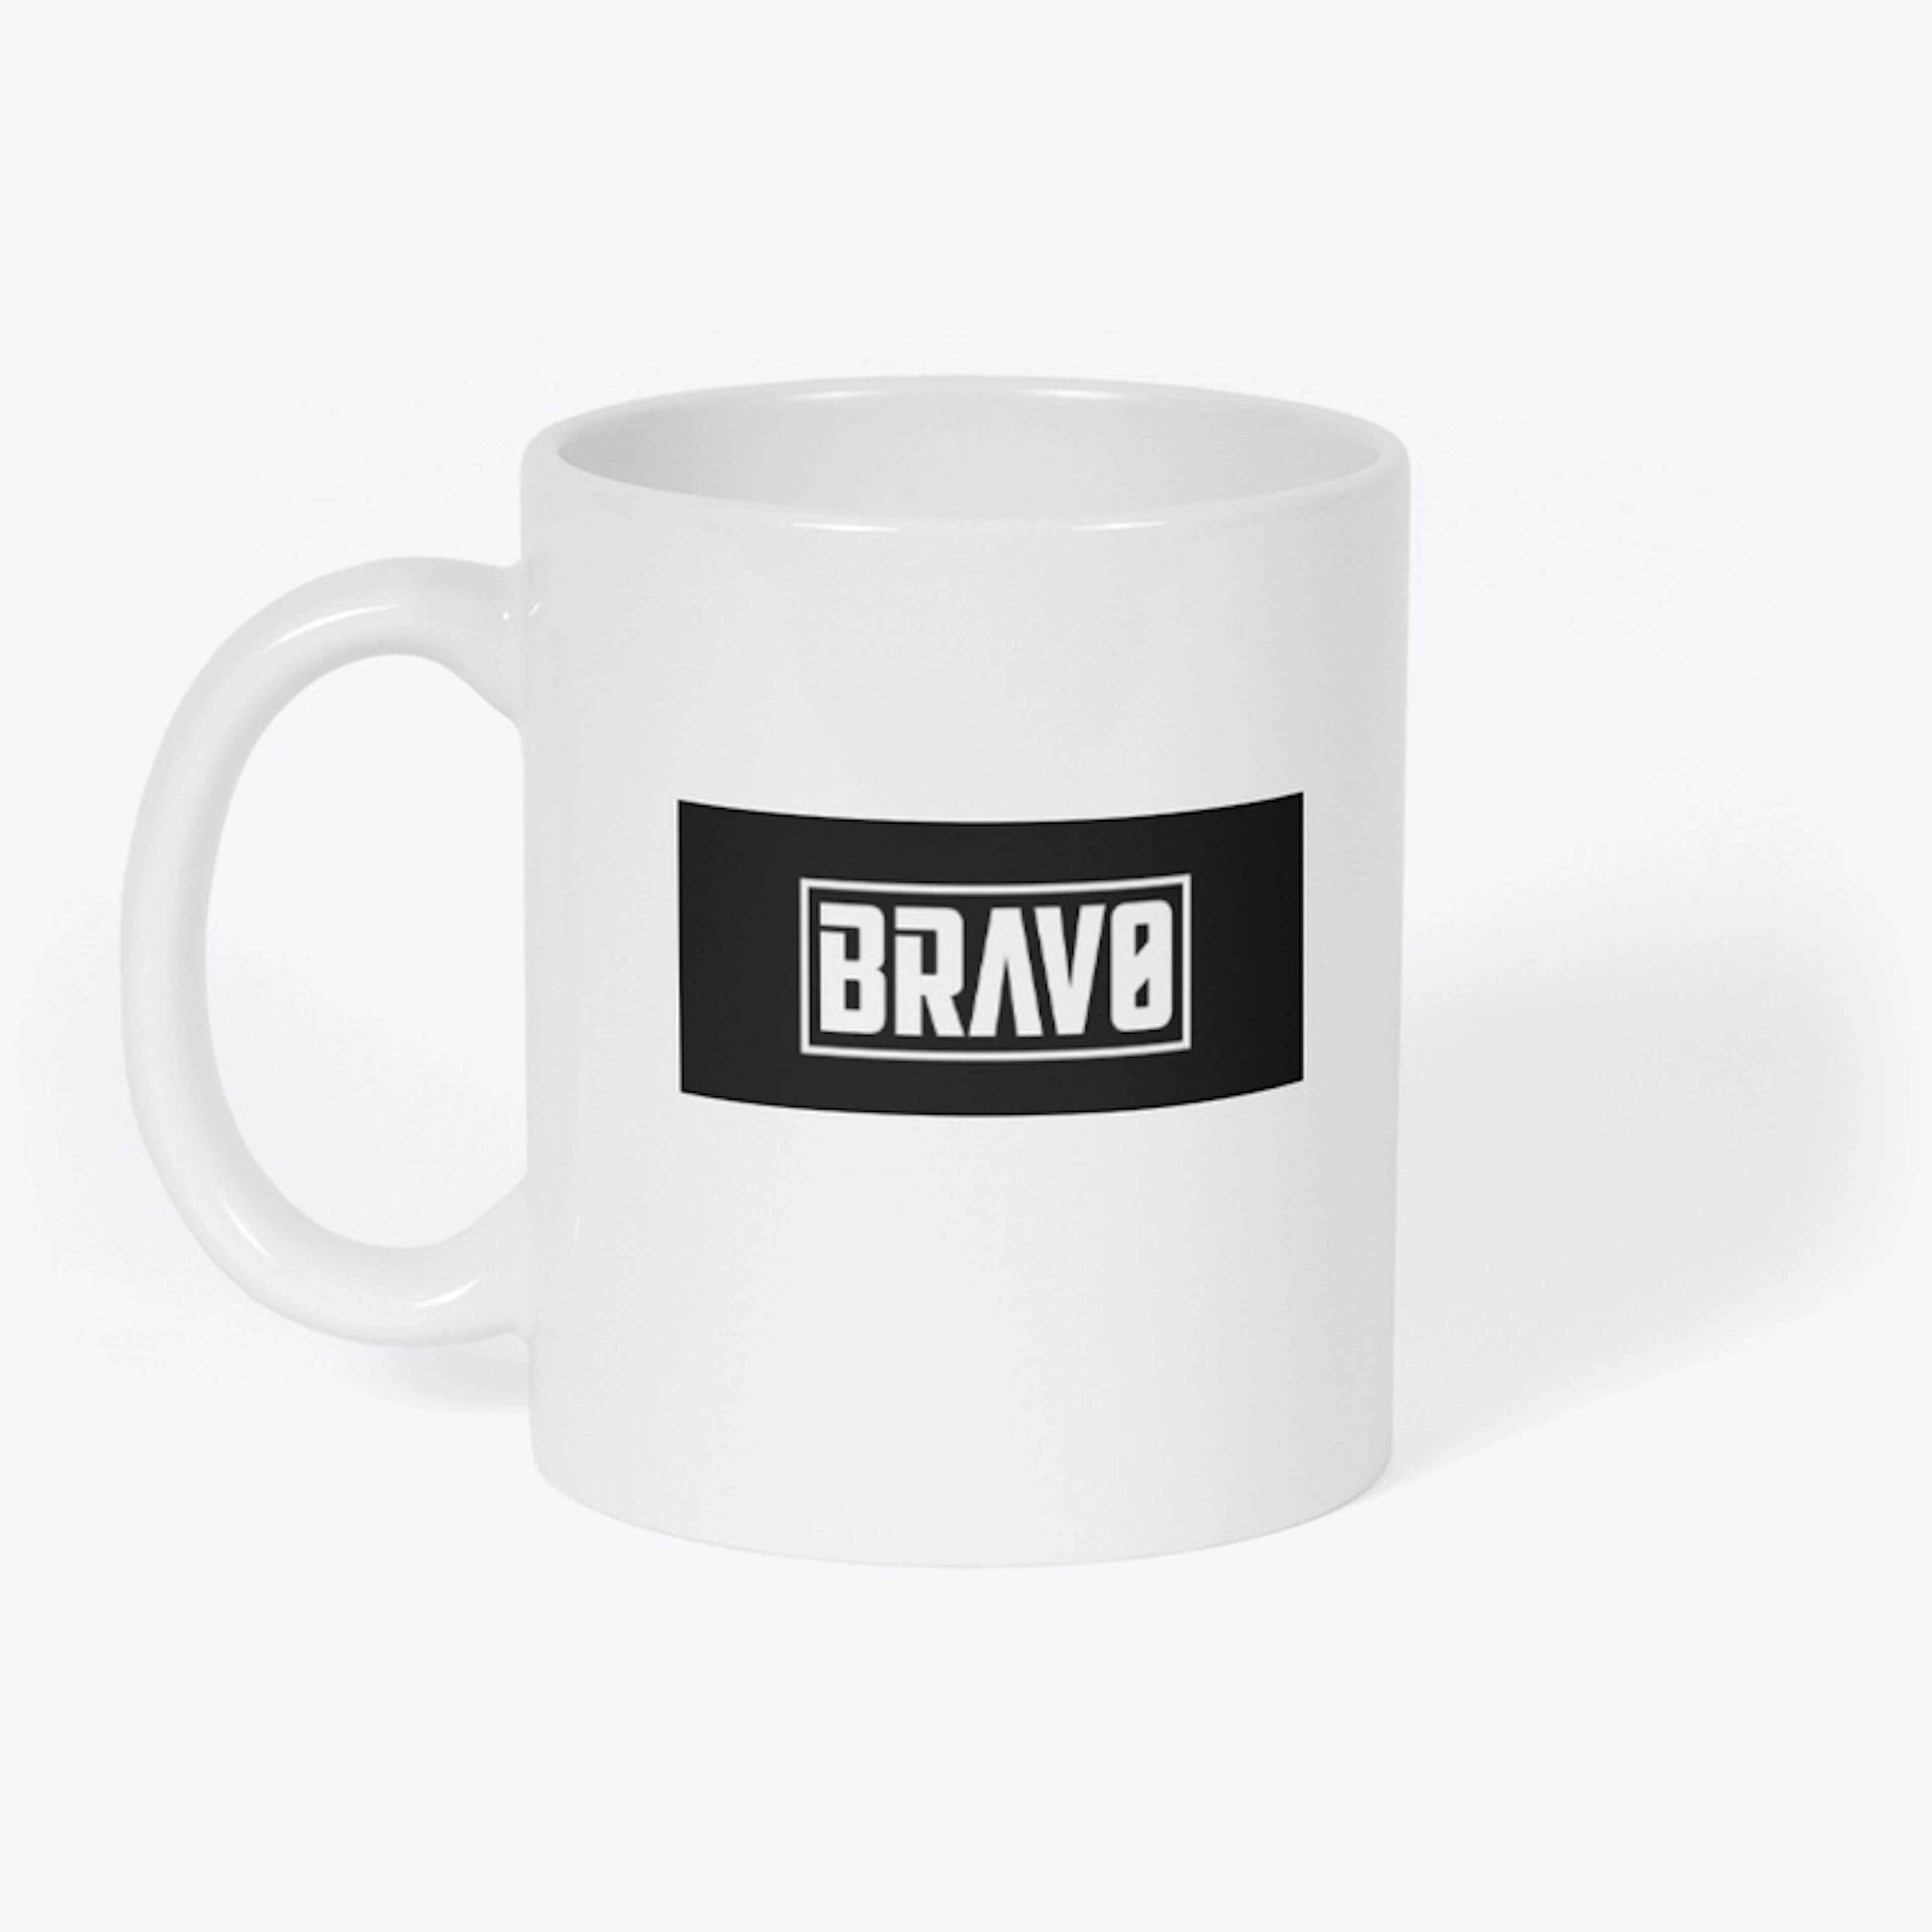 Brav0 Coffee Mug